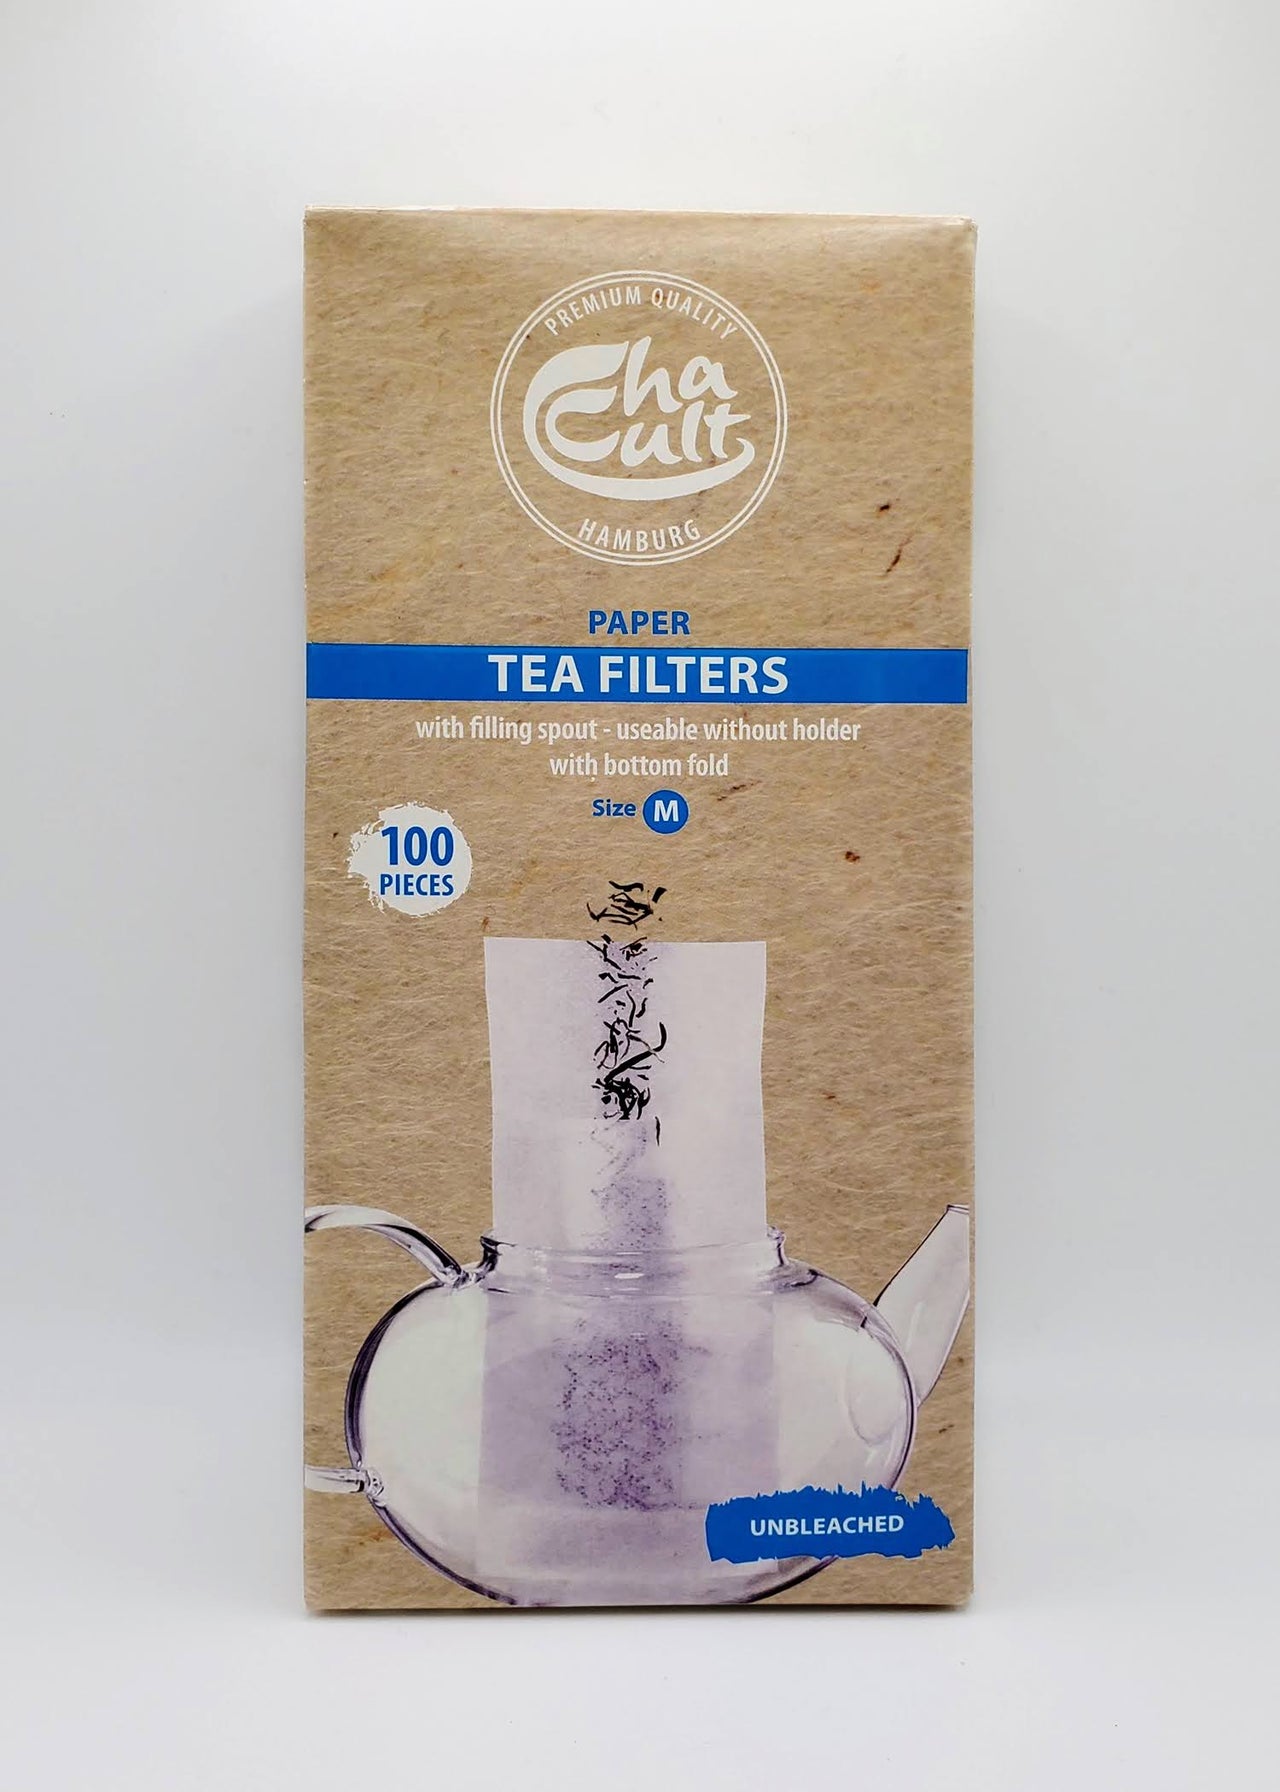 Medium Paper Tea Filter Bags - 100ct